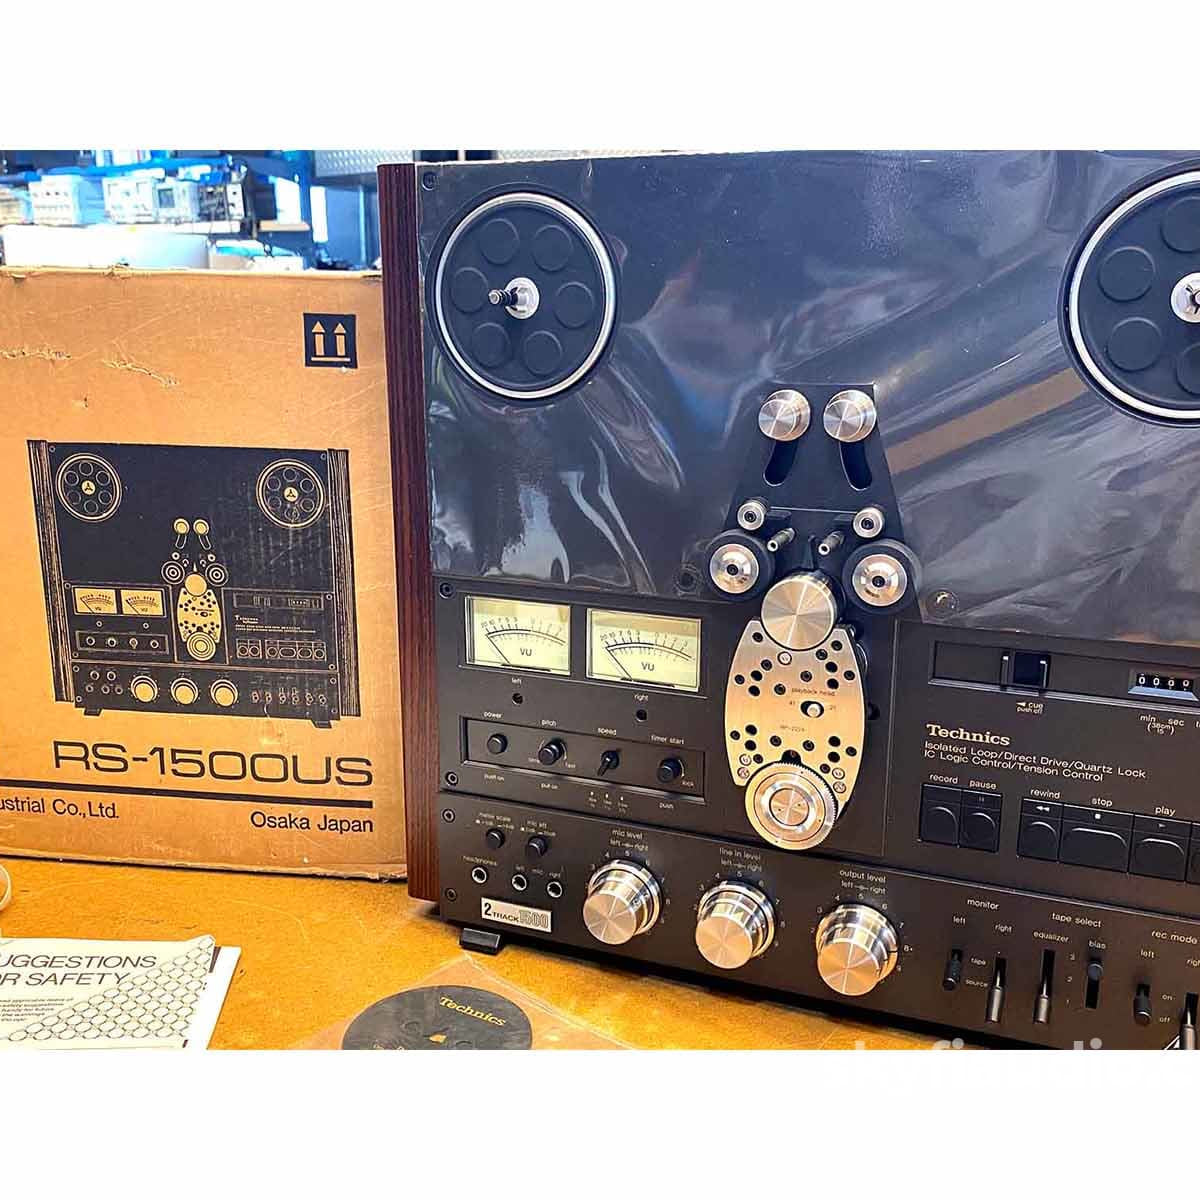 Technics RS-1500 REEL To REEL Tape Player for Sale in Deerfield